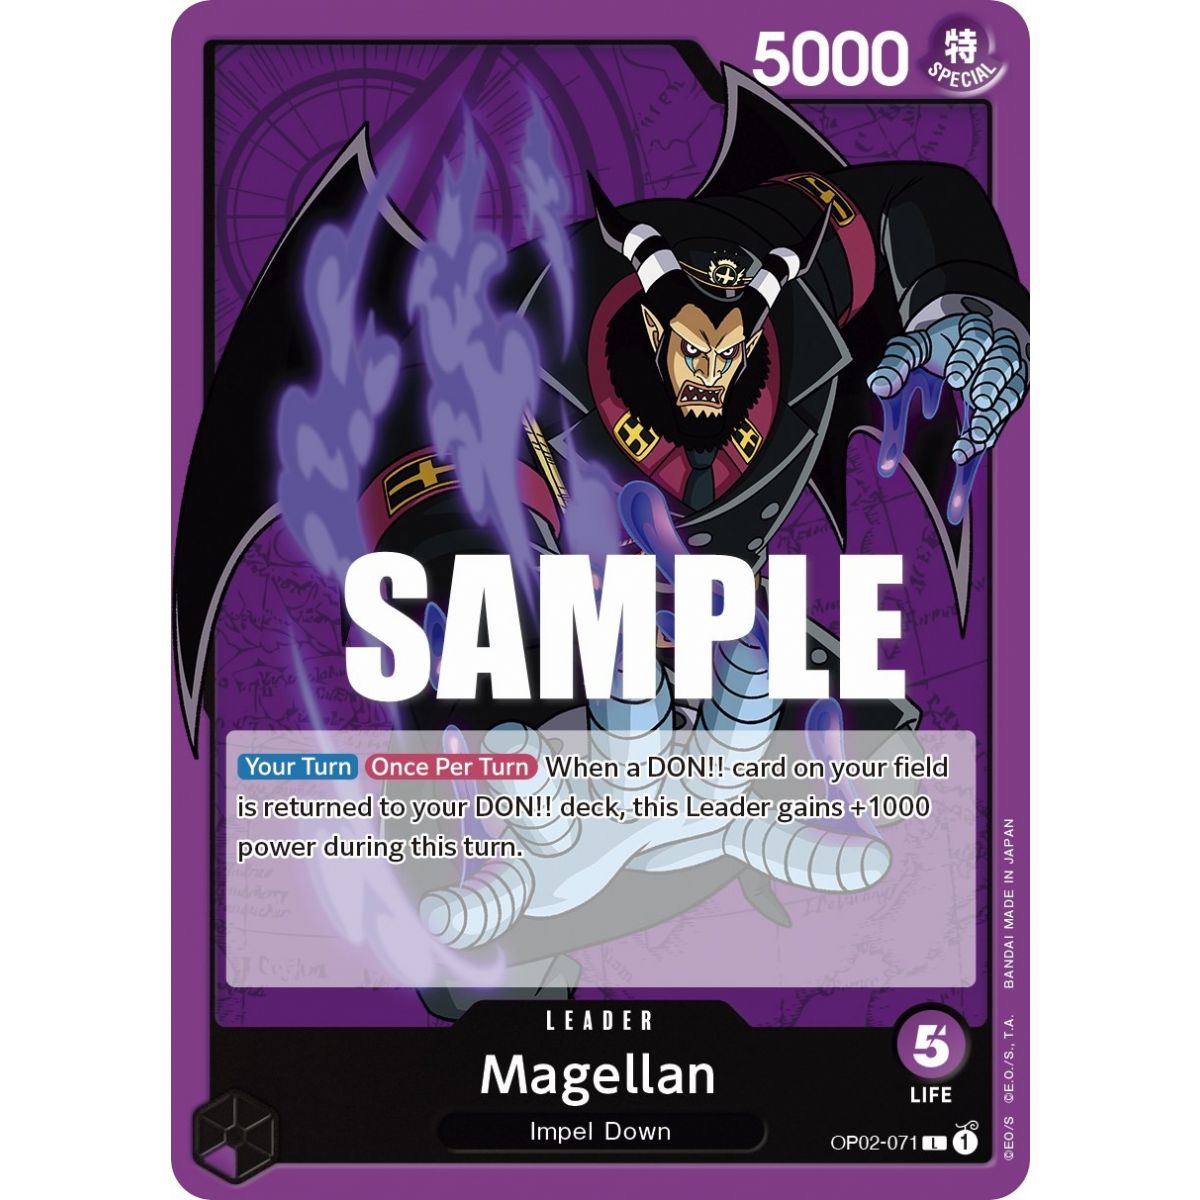 Magellan (071) - L  OP02-071 - OP02 Paramount War